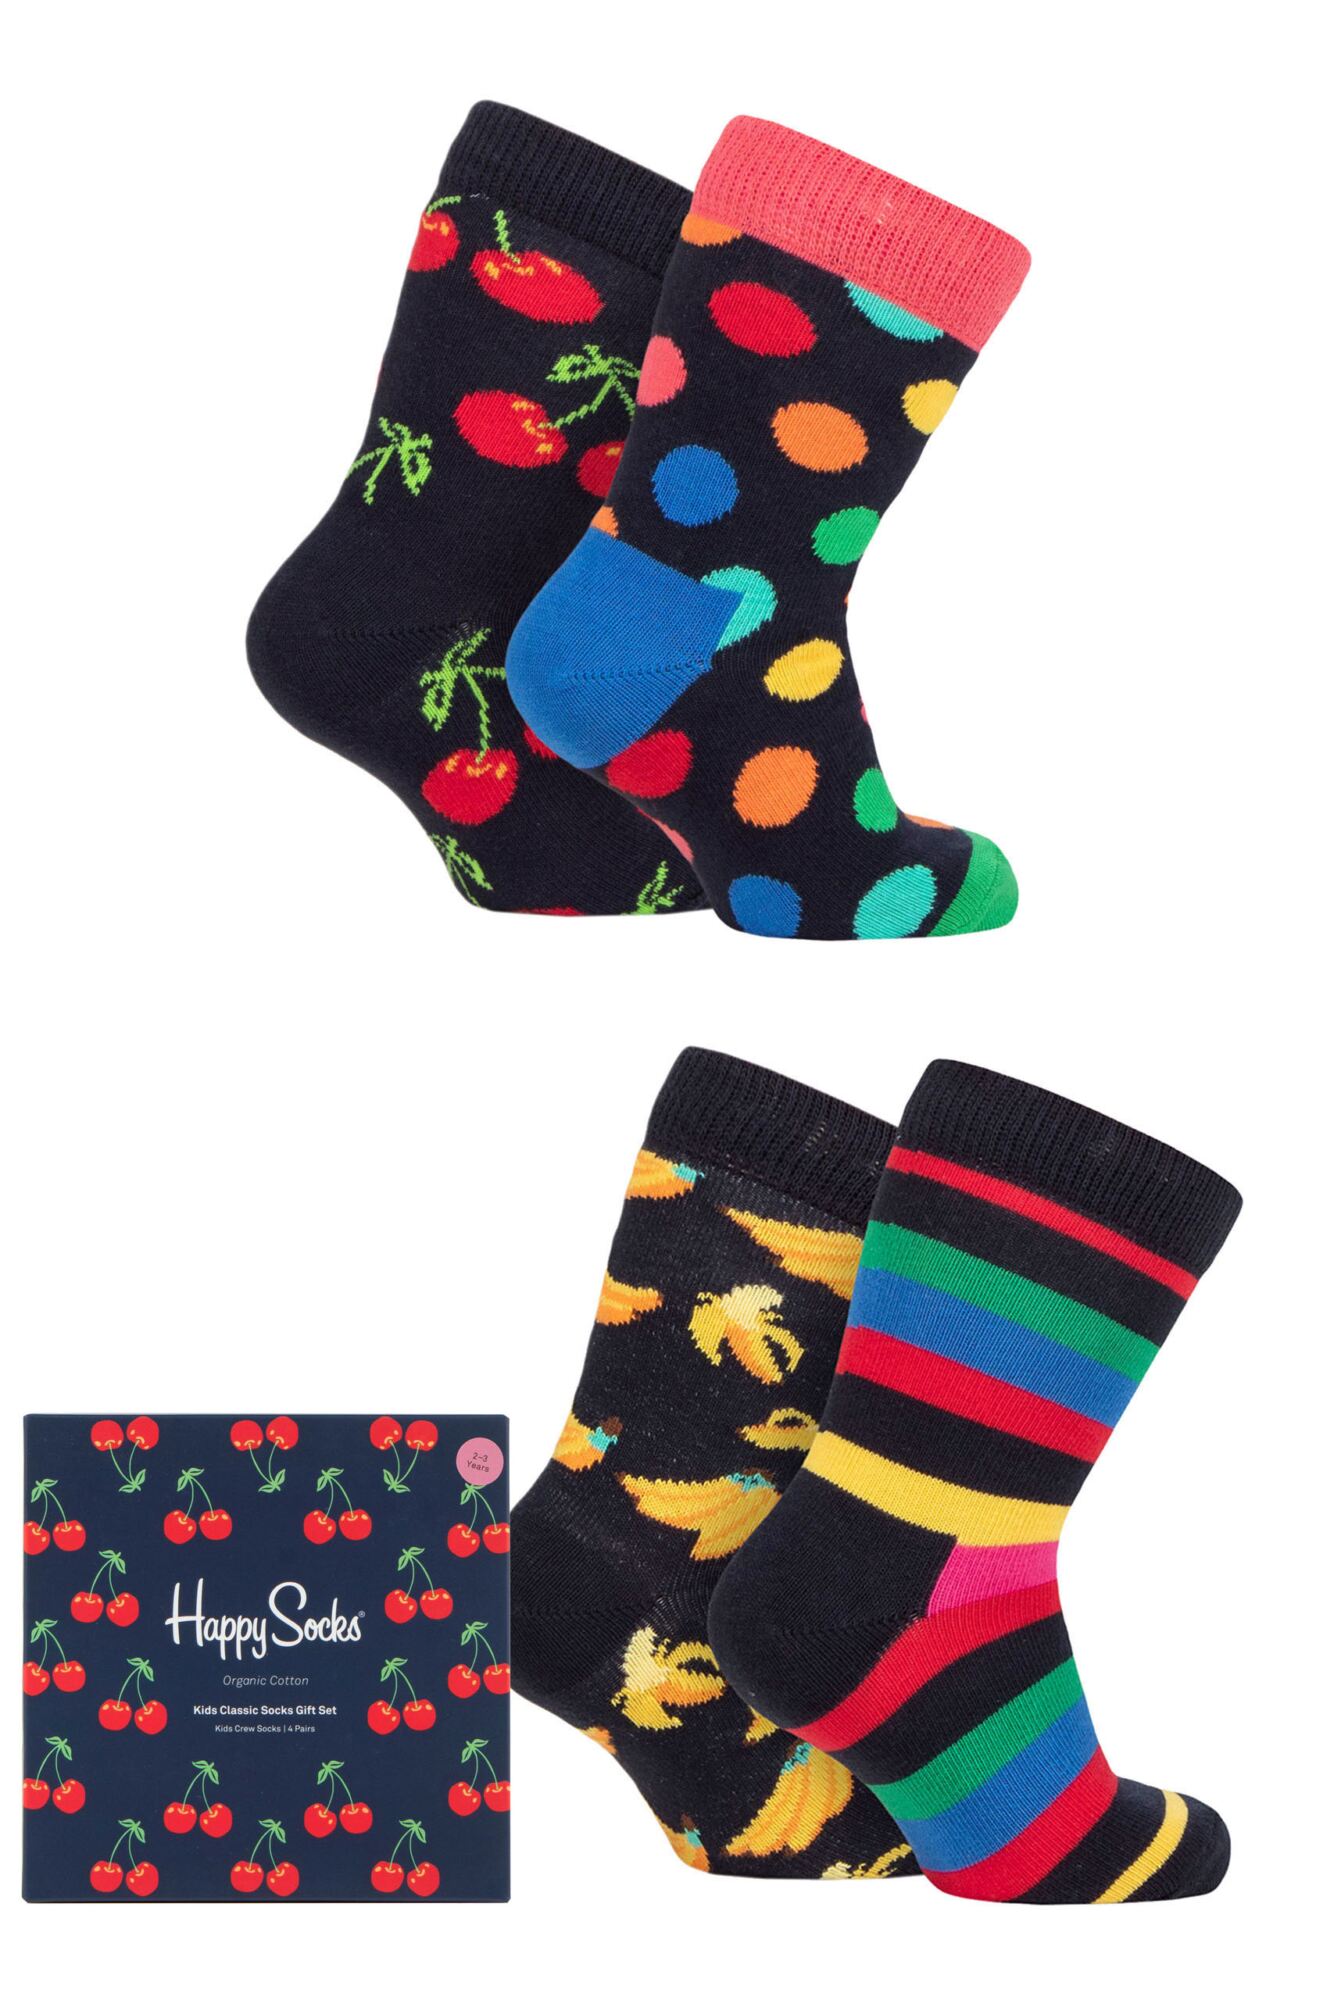 Boys and Girls 4 Pair Happy Socks Gift Boxed Classic Socks